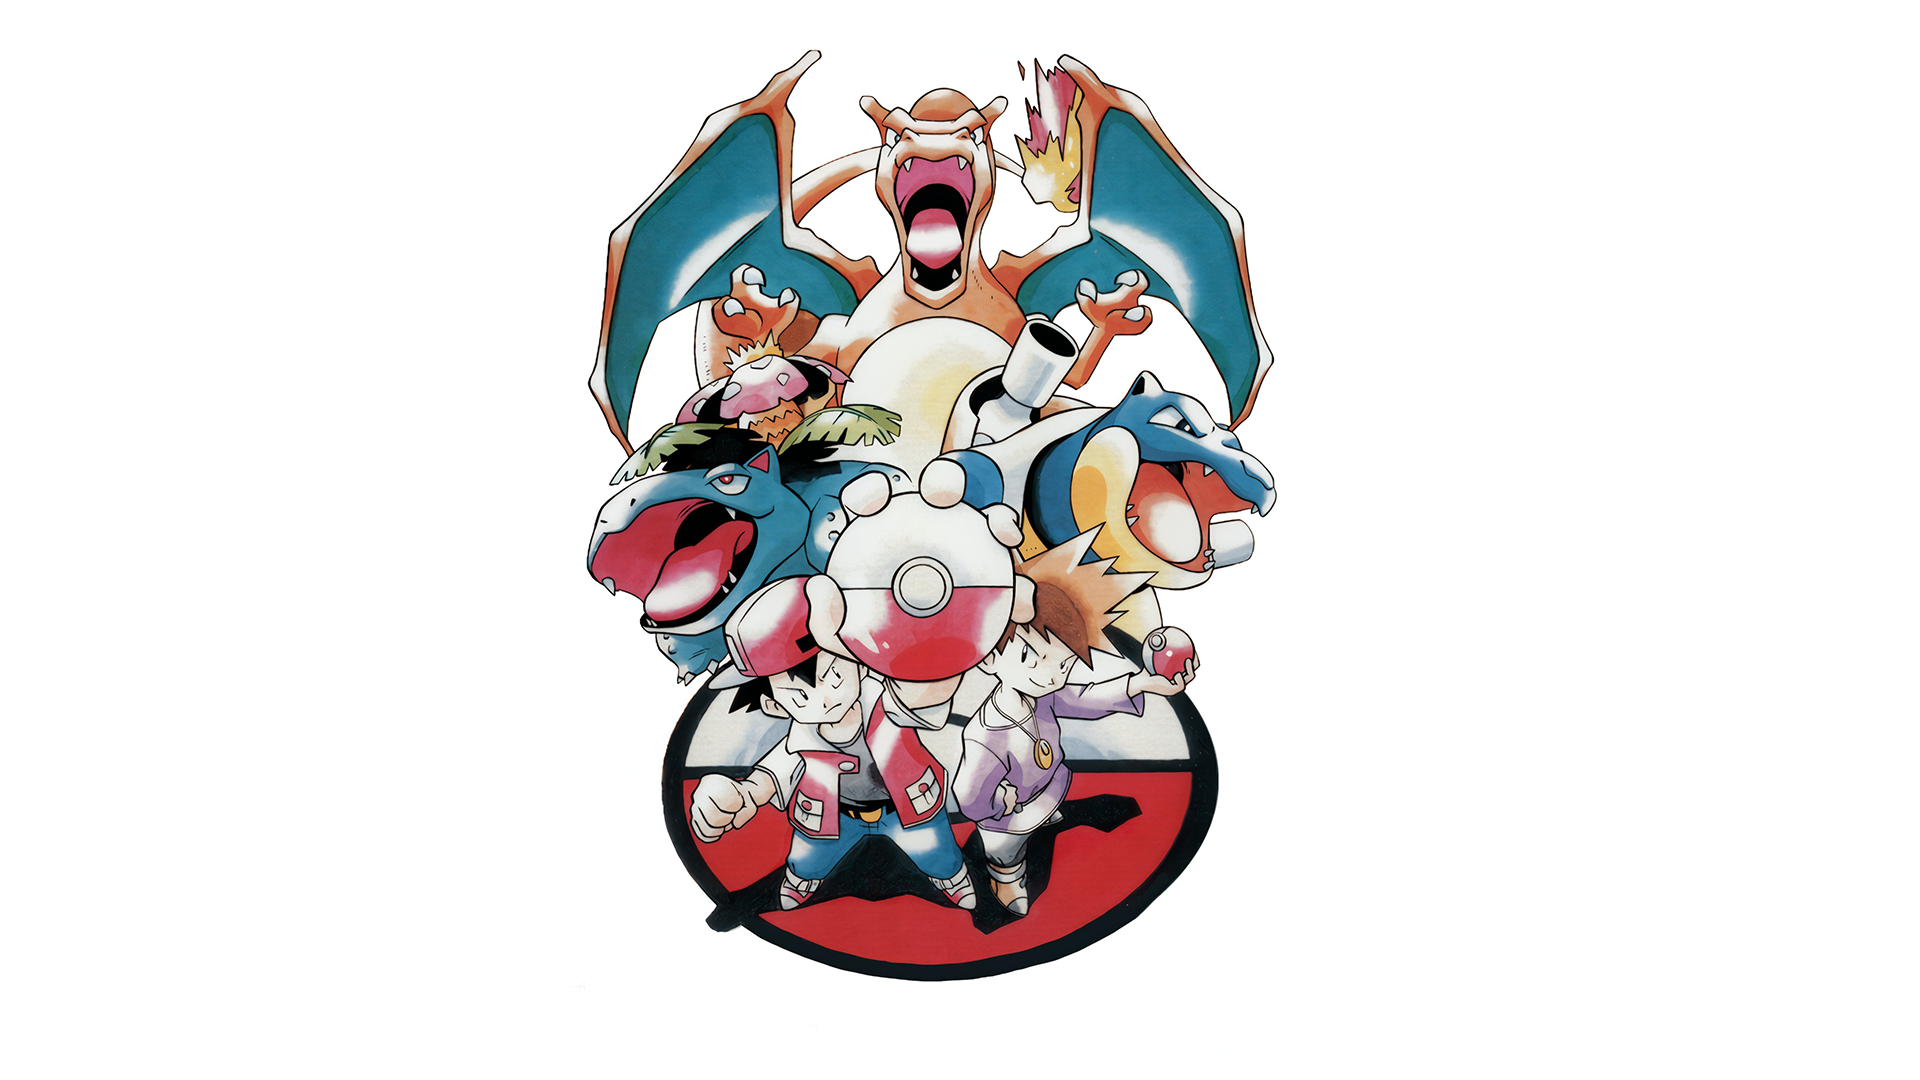 Anime 1920x1080 Pokémon Charizard Blastoise Venusaur red blue Red (Pokemon) Red (character) Poke Ball